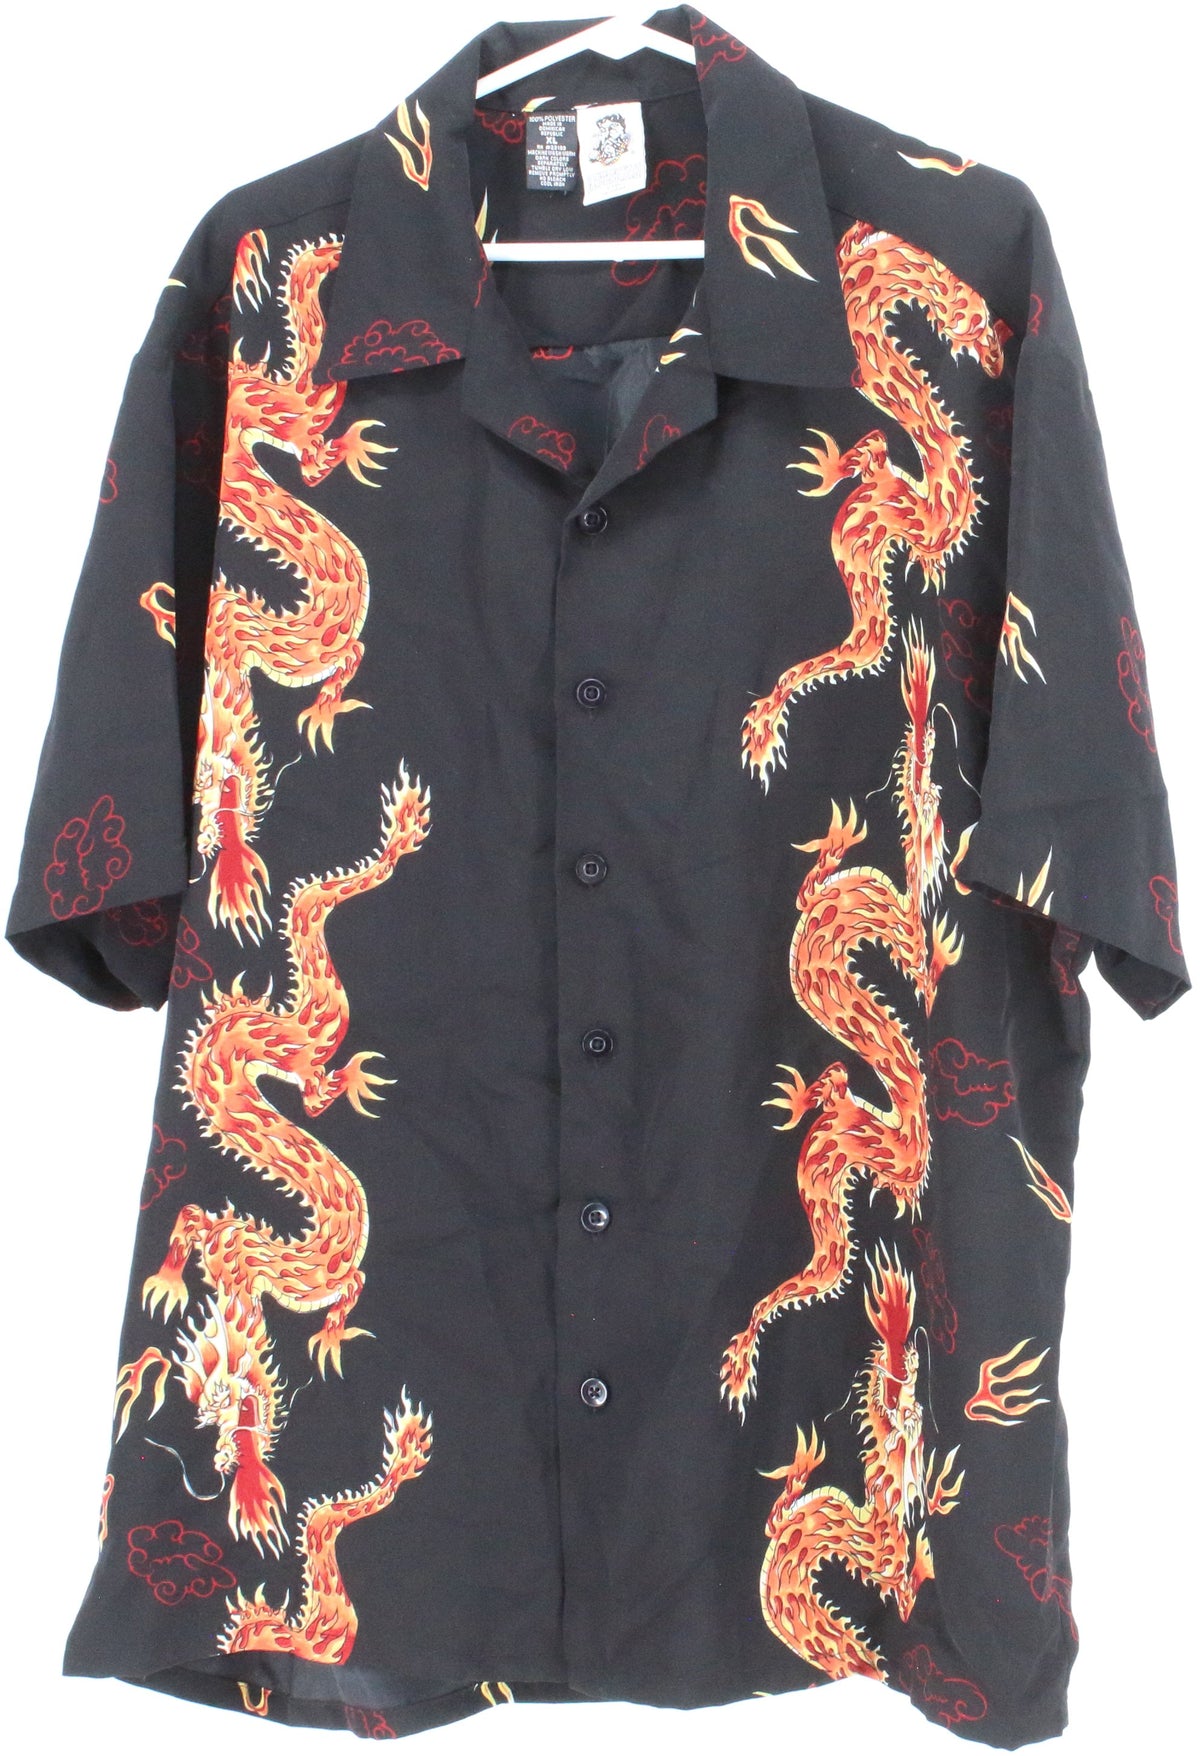 Kennington Ltd. Black Dragon Print Short Sleeve Shirt